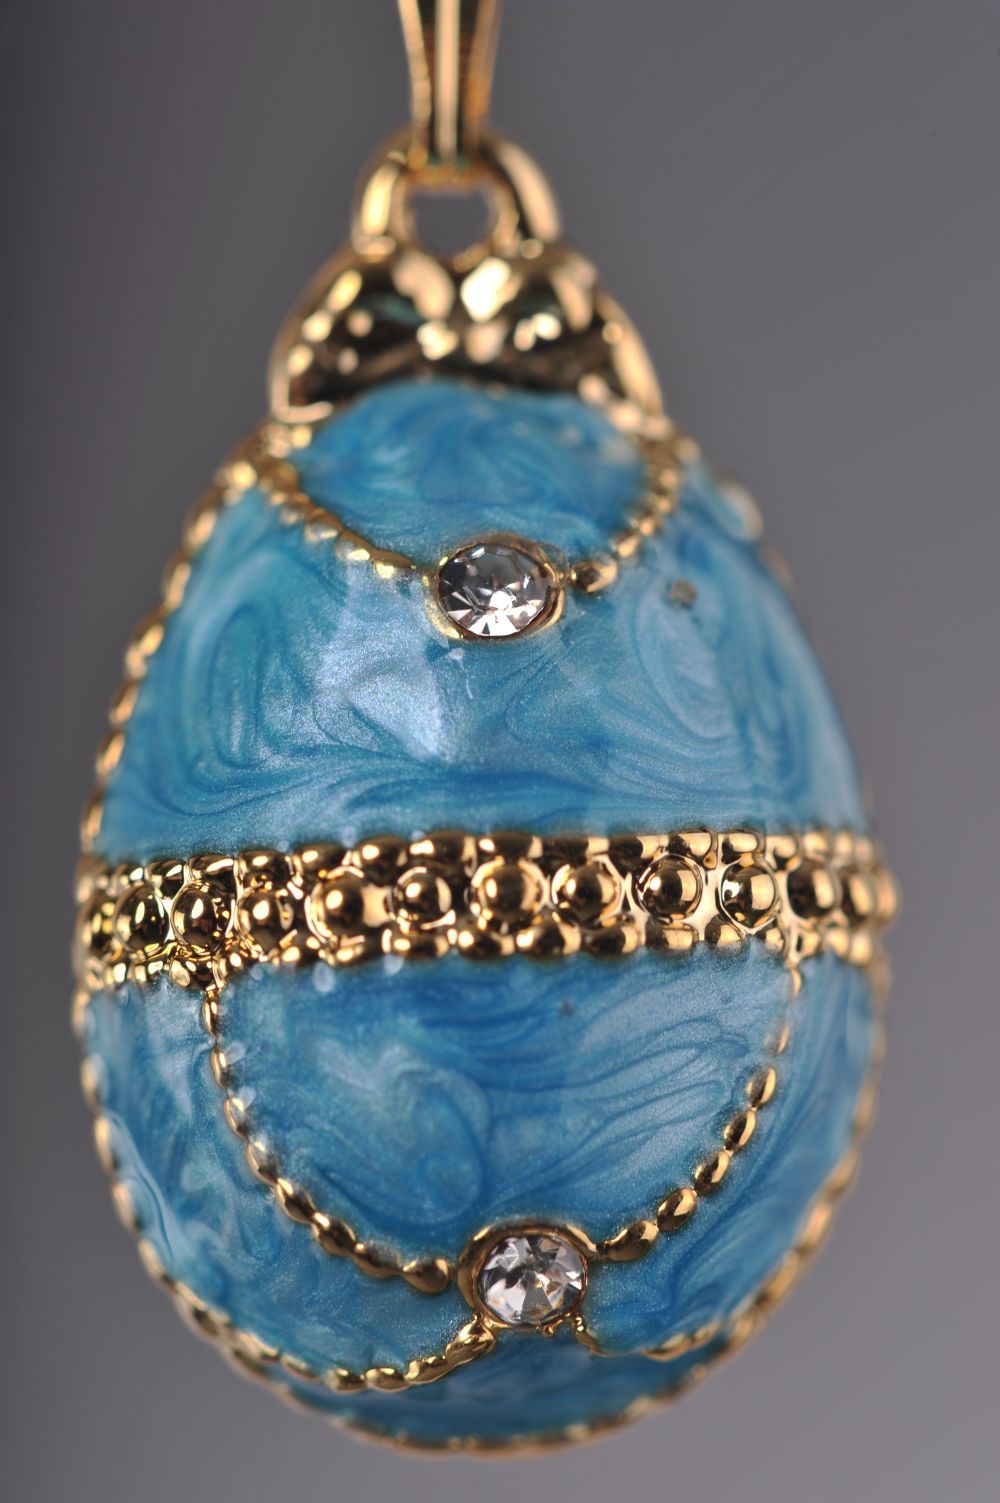 Keren Kopal Turquoise Egg Pendant Necklace  37.00